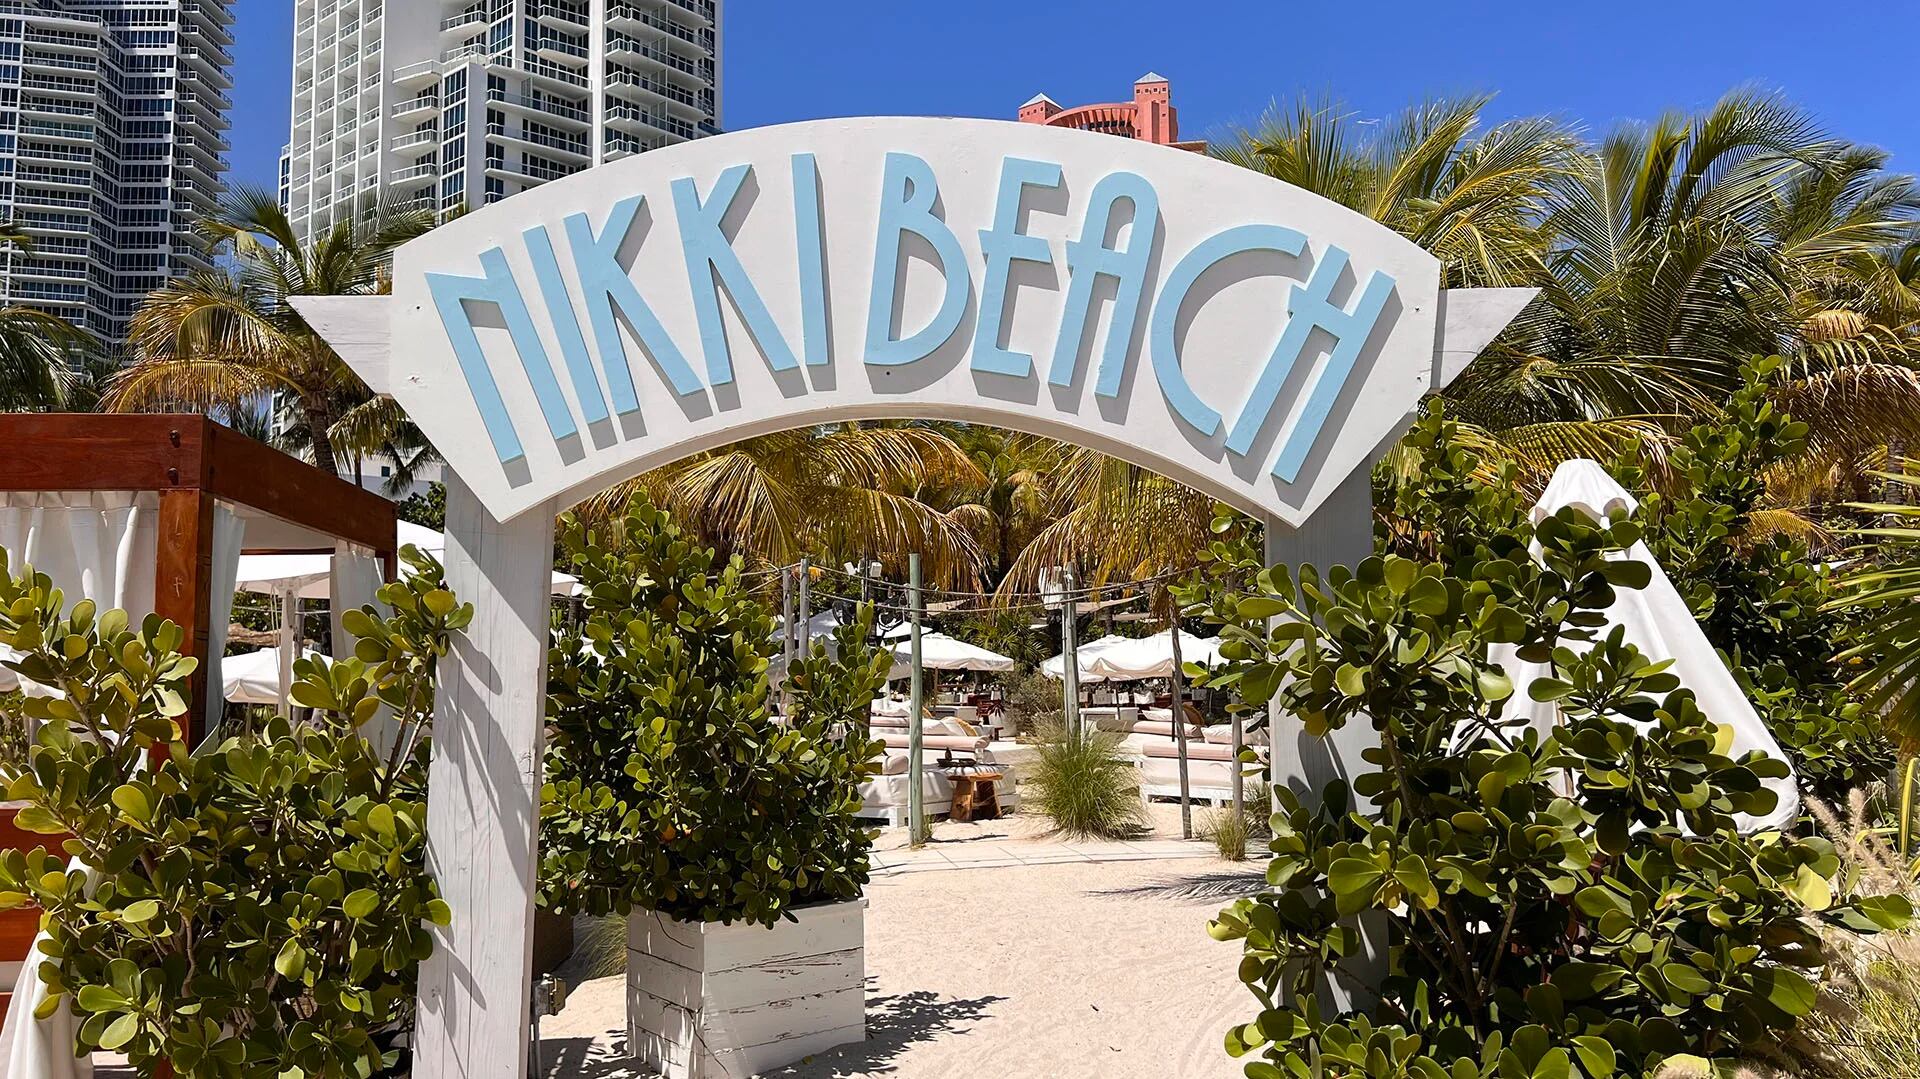 El futuro del mundialmente famoso restaurante Nikki Beach en vilo